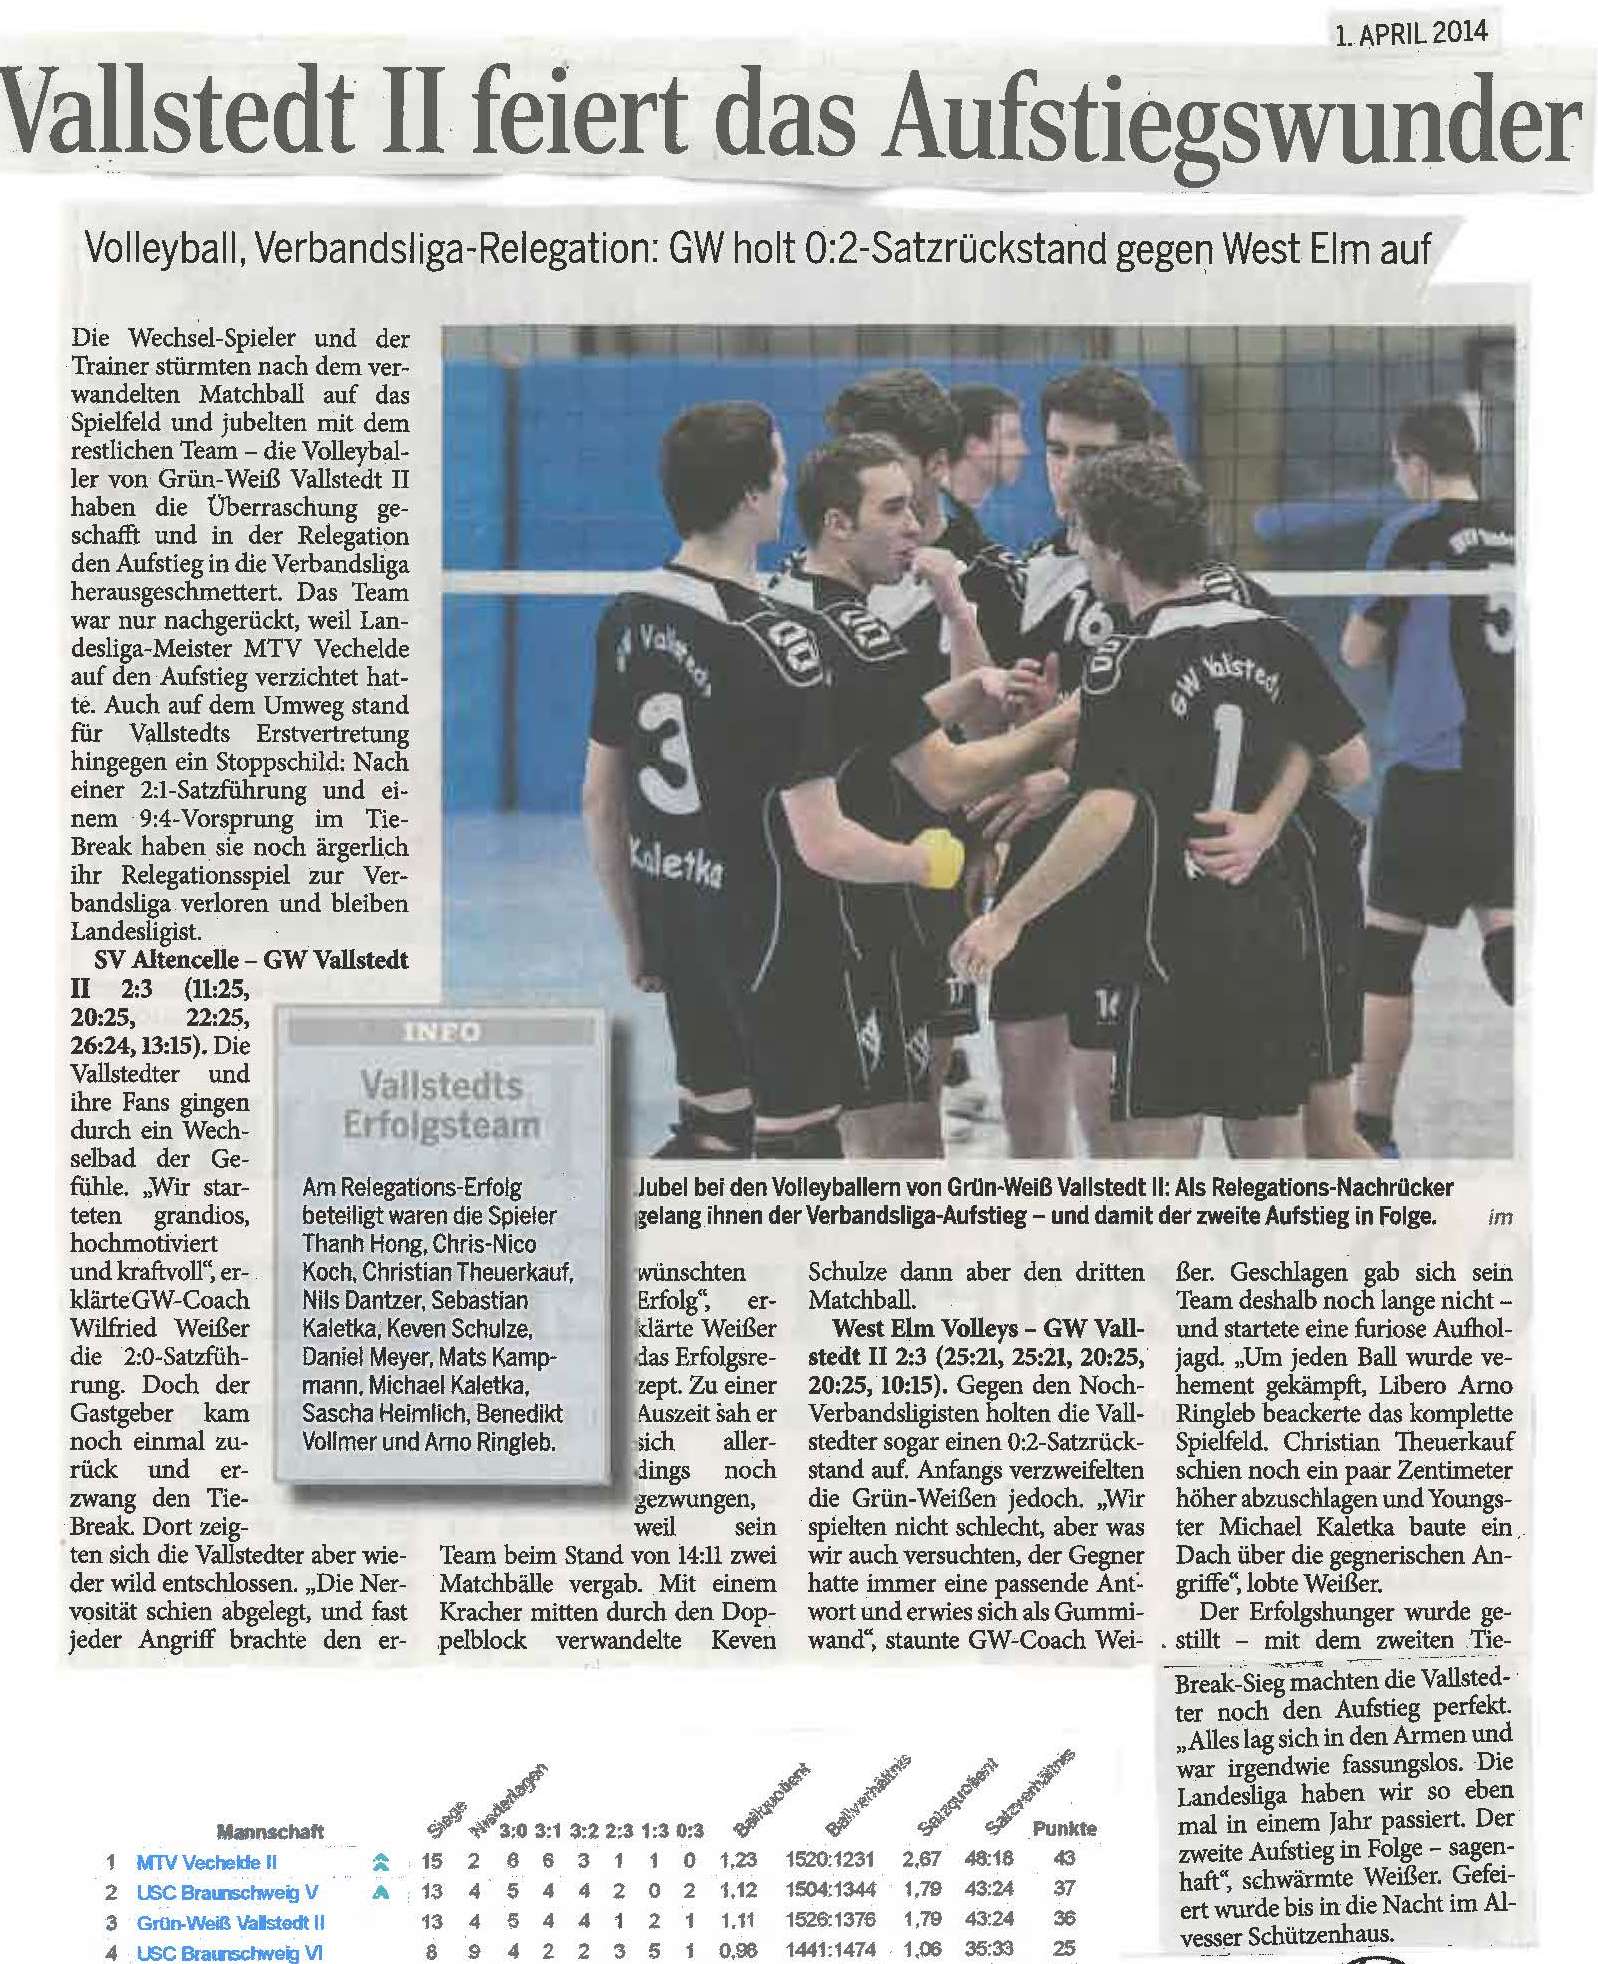 01.04.2014 Relegation Verbandsliga 2. Herren